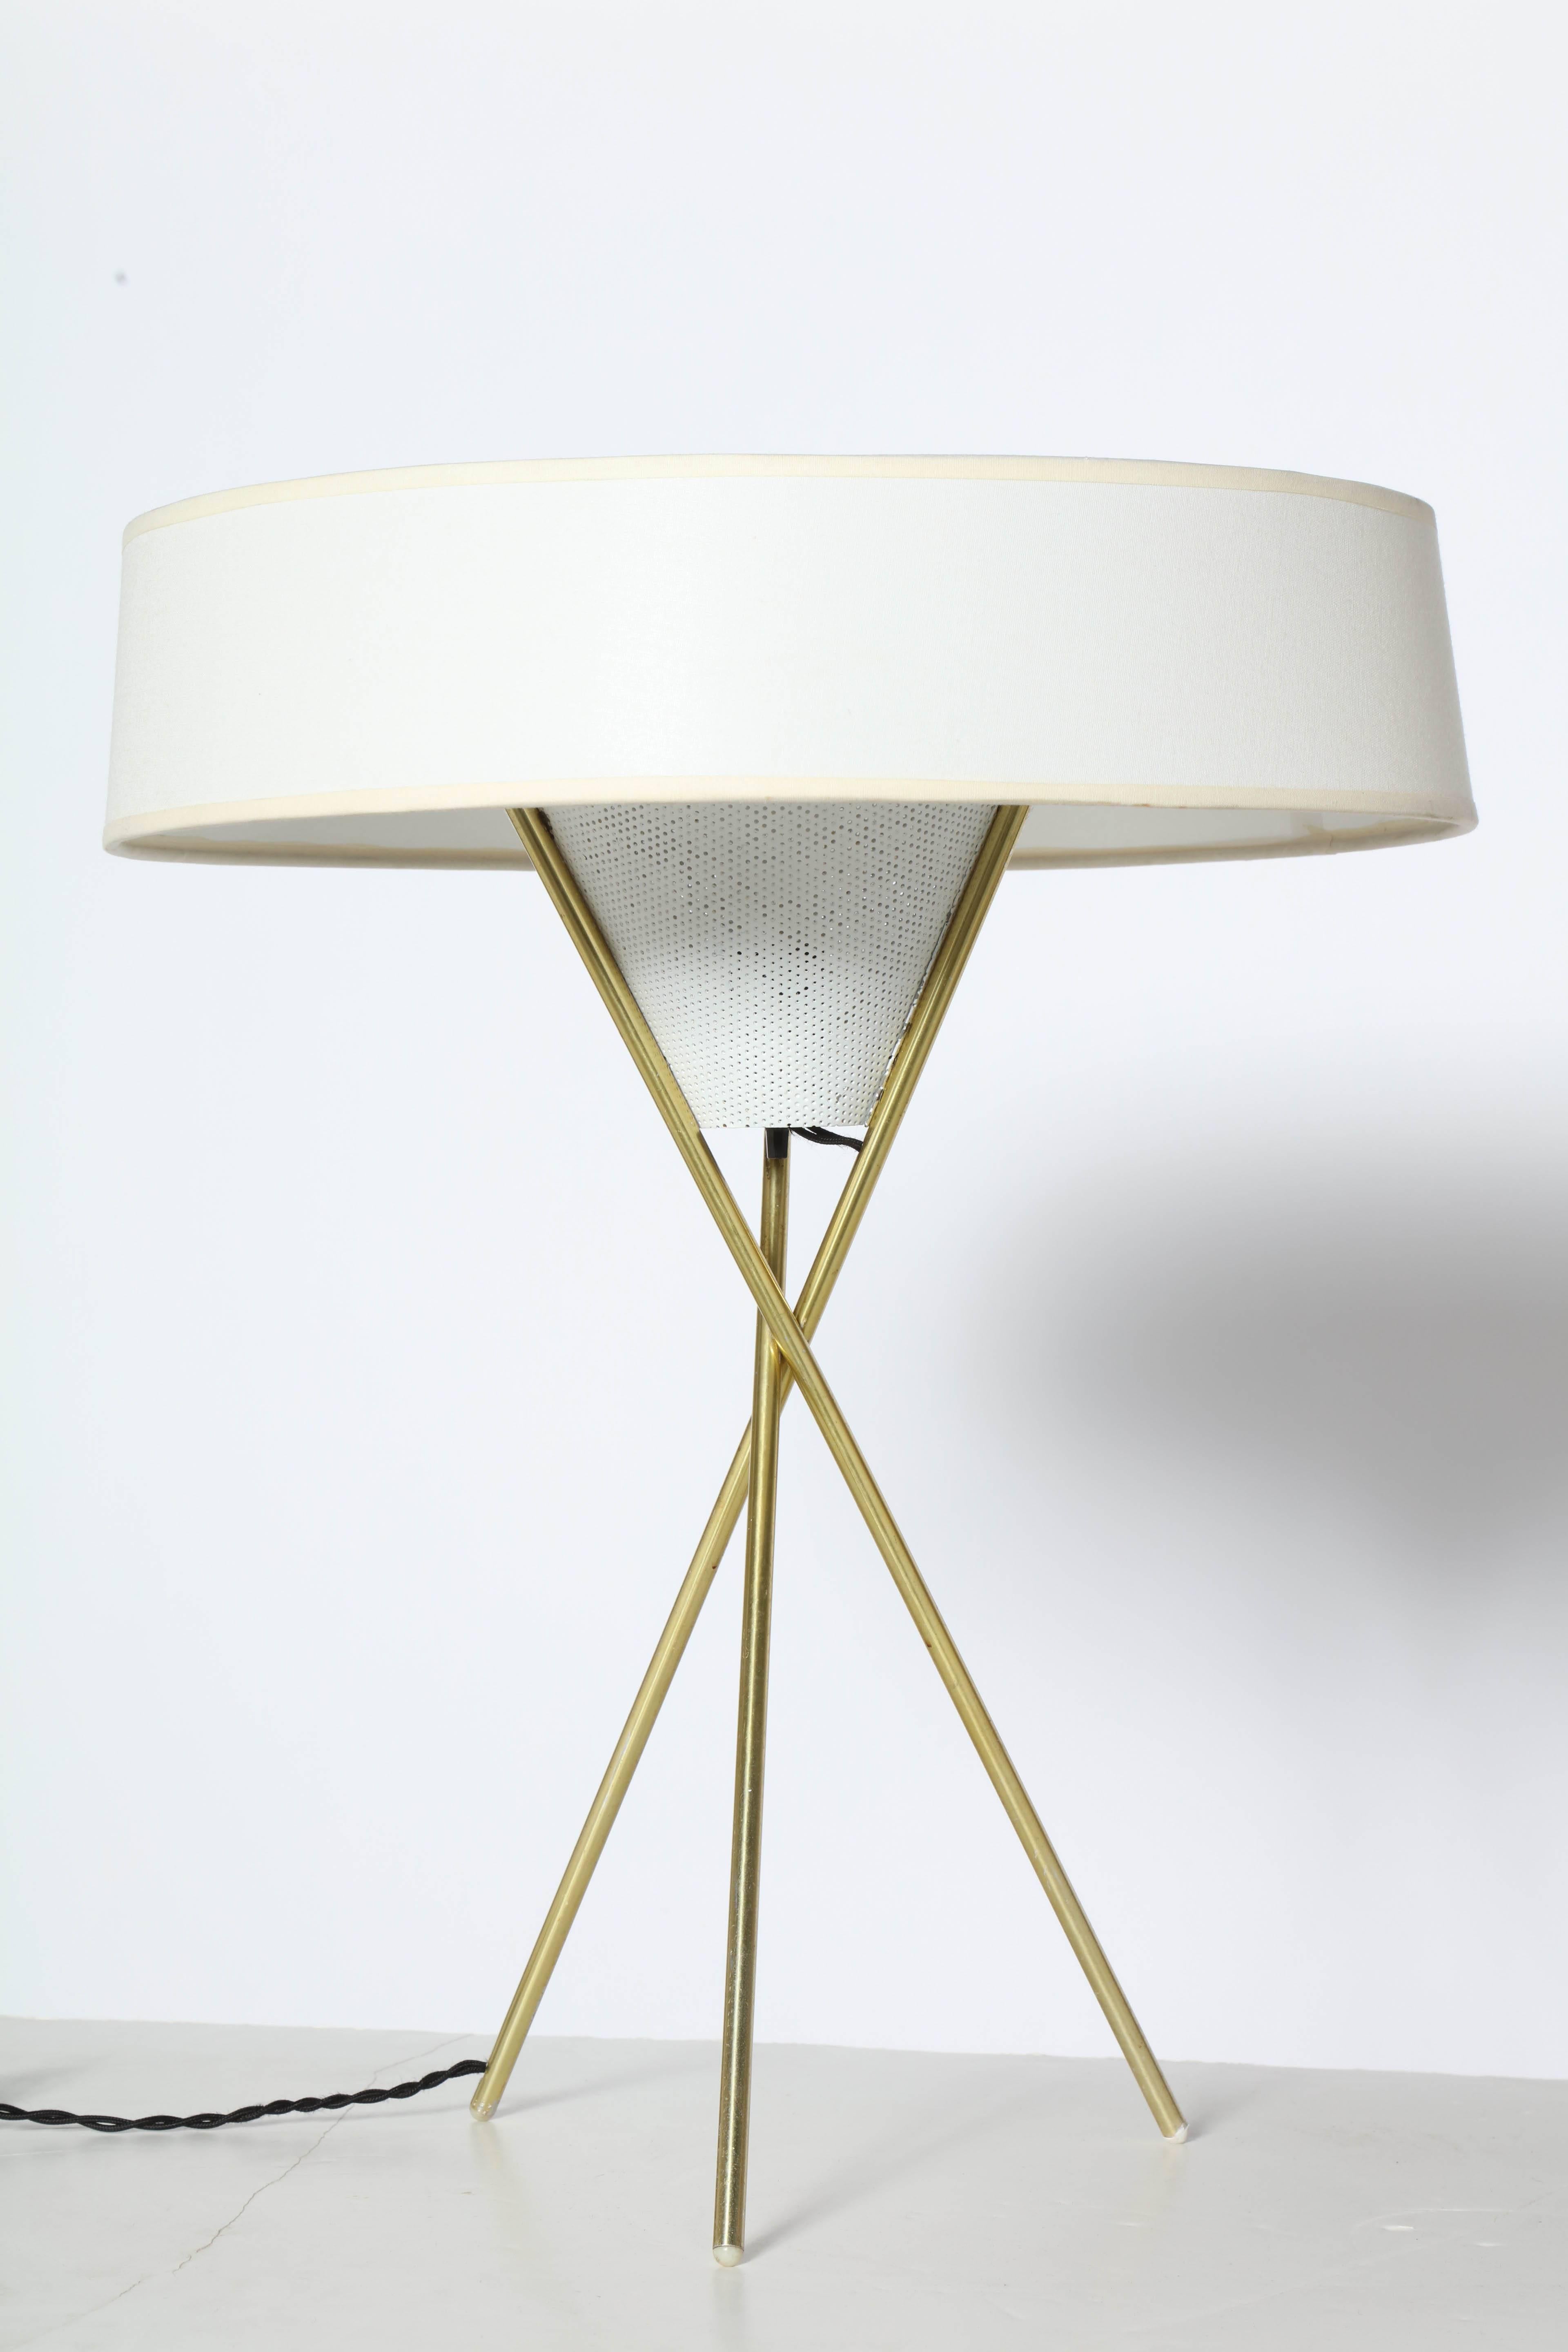 Gerald Thurston for Lightolier Brass Tripod Table Lamp with White Linen Shade 2